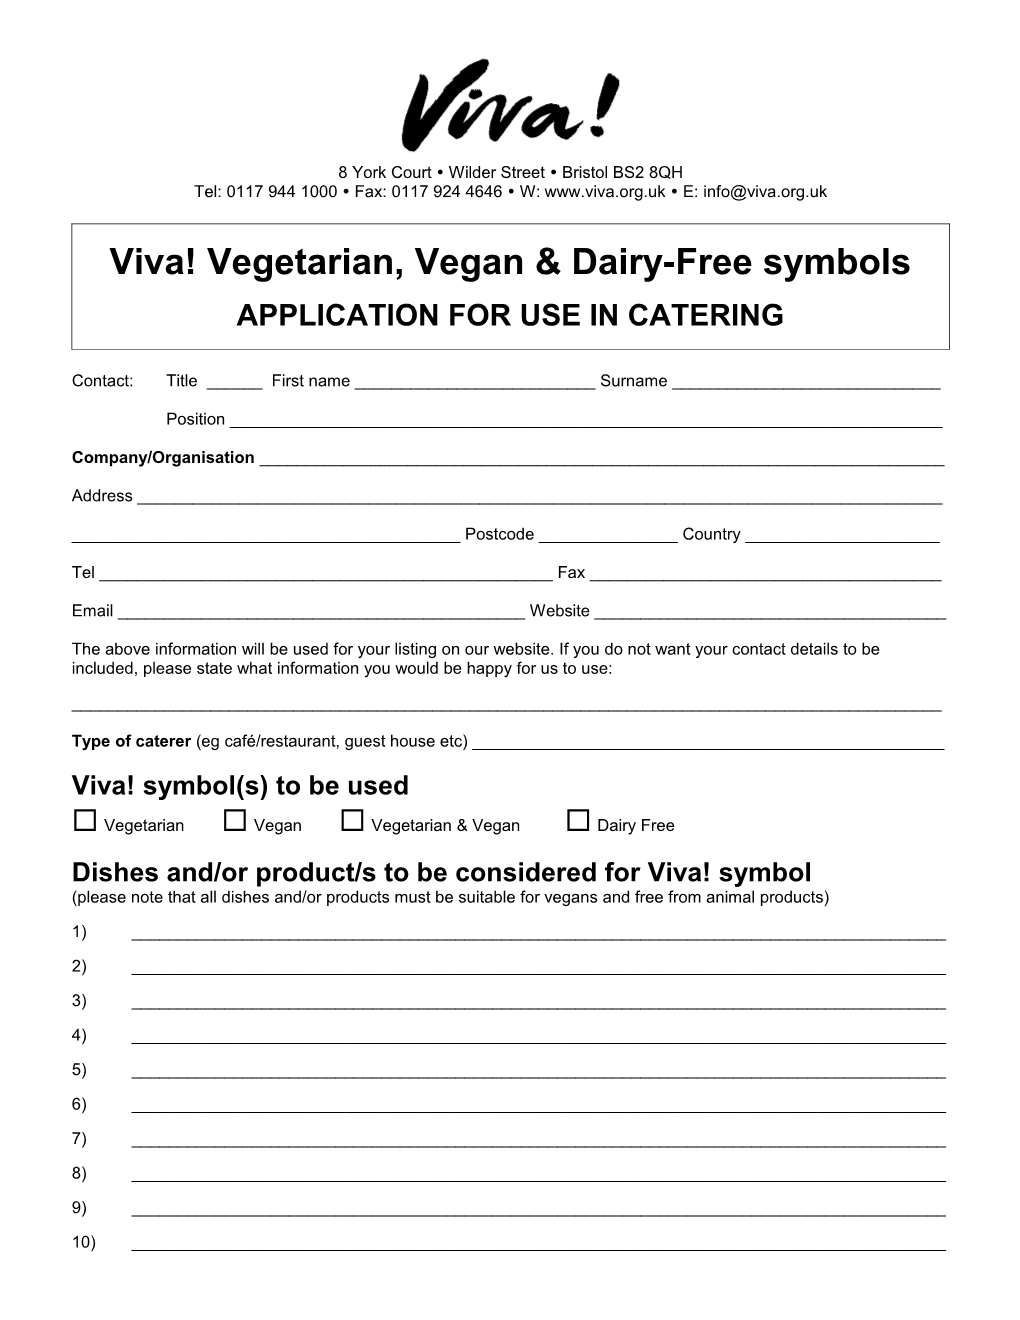 Viva! Vegetarian, Vegan & Dairy-Free Symbols